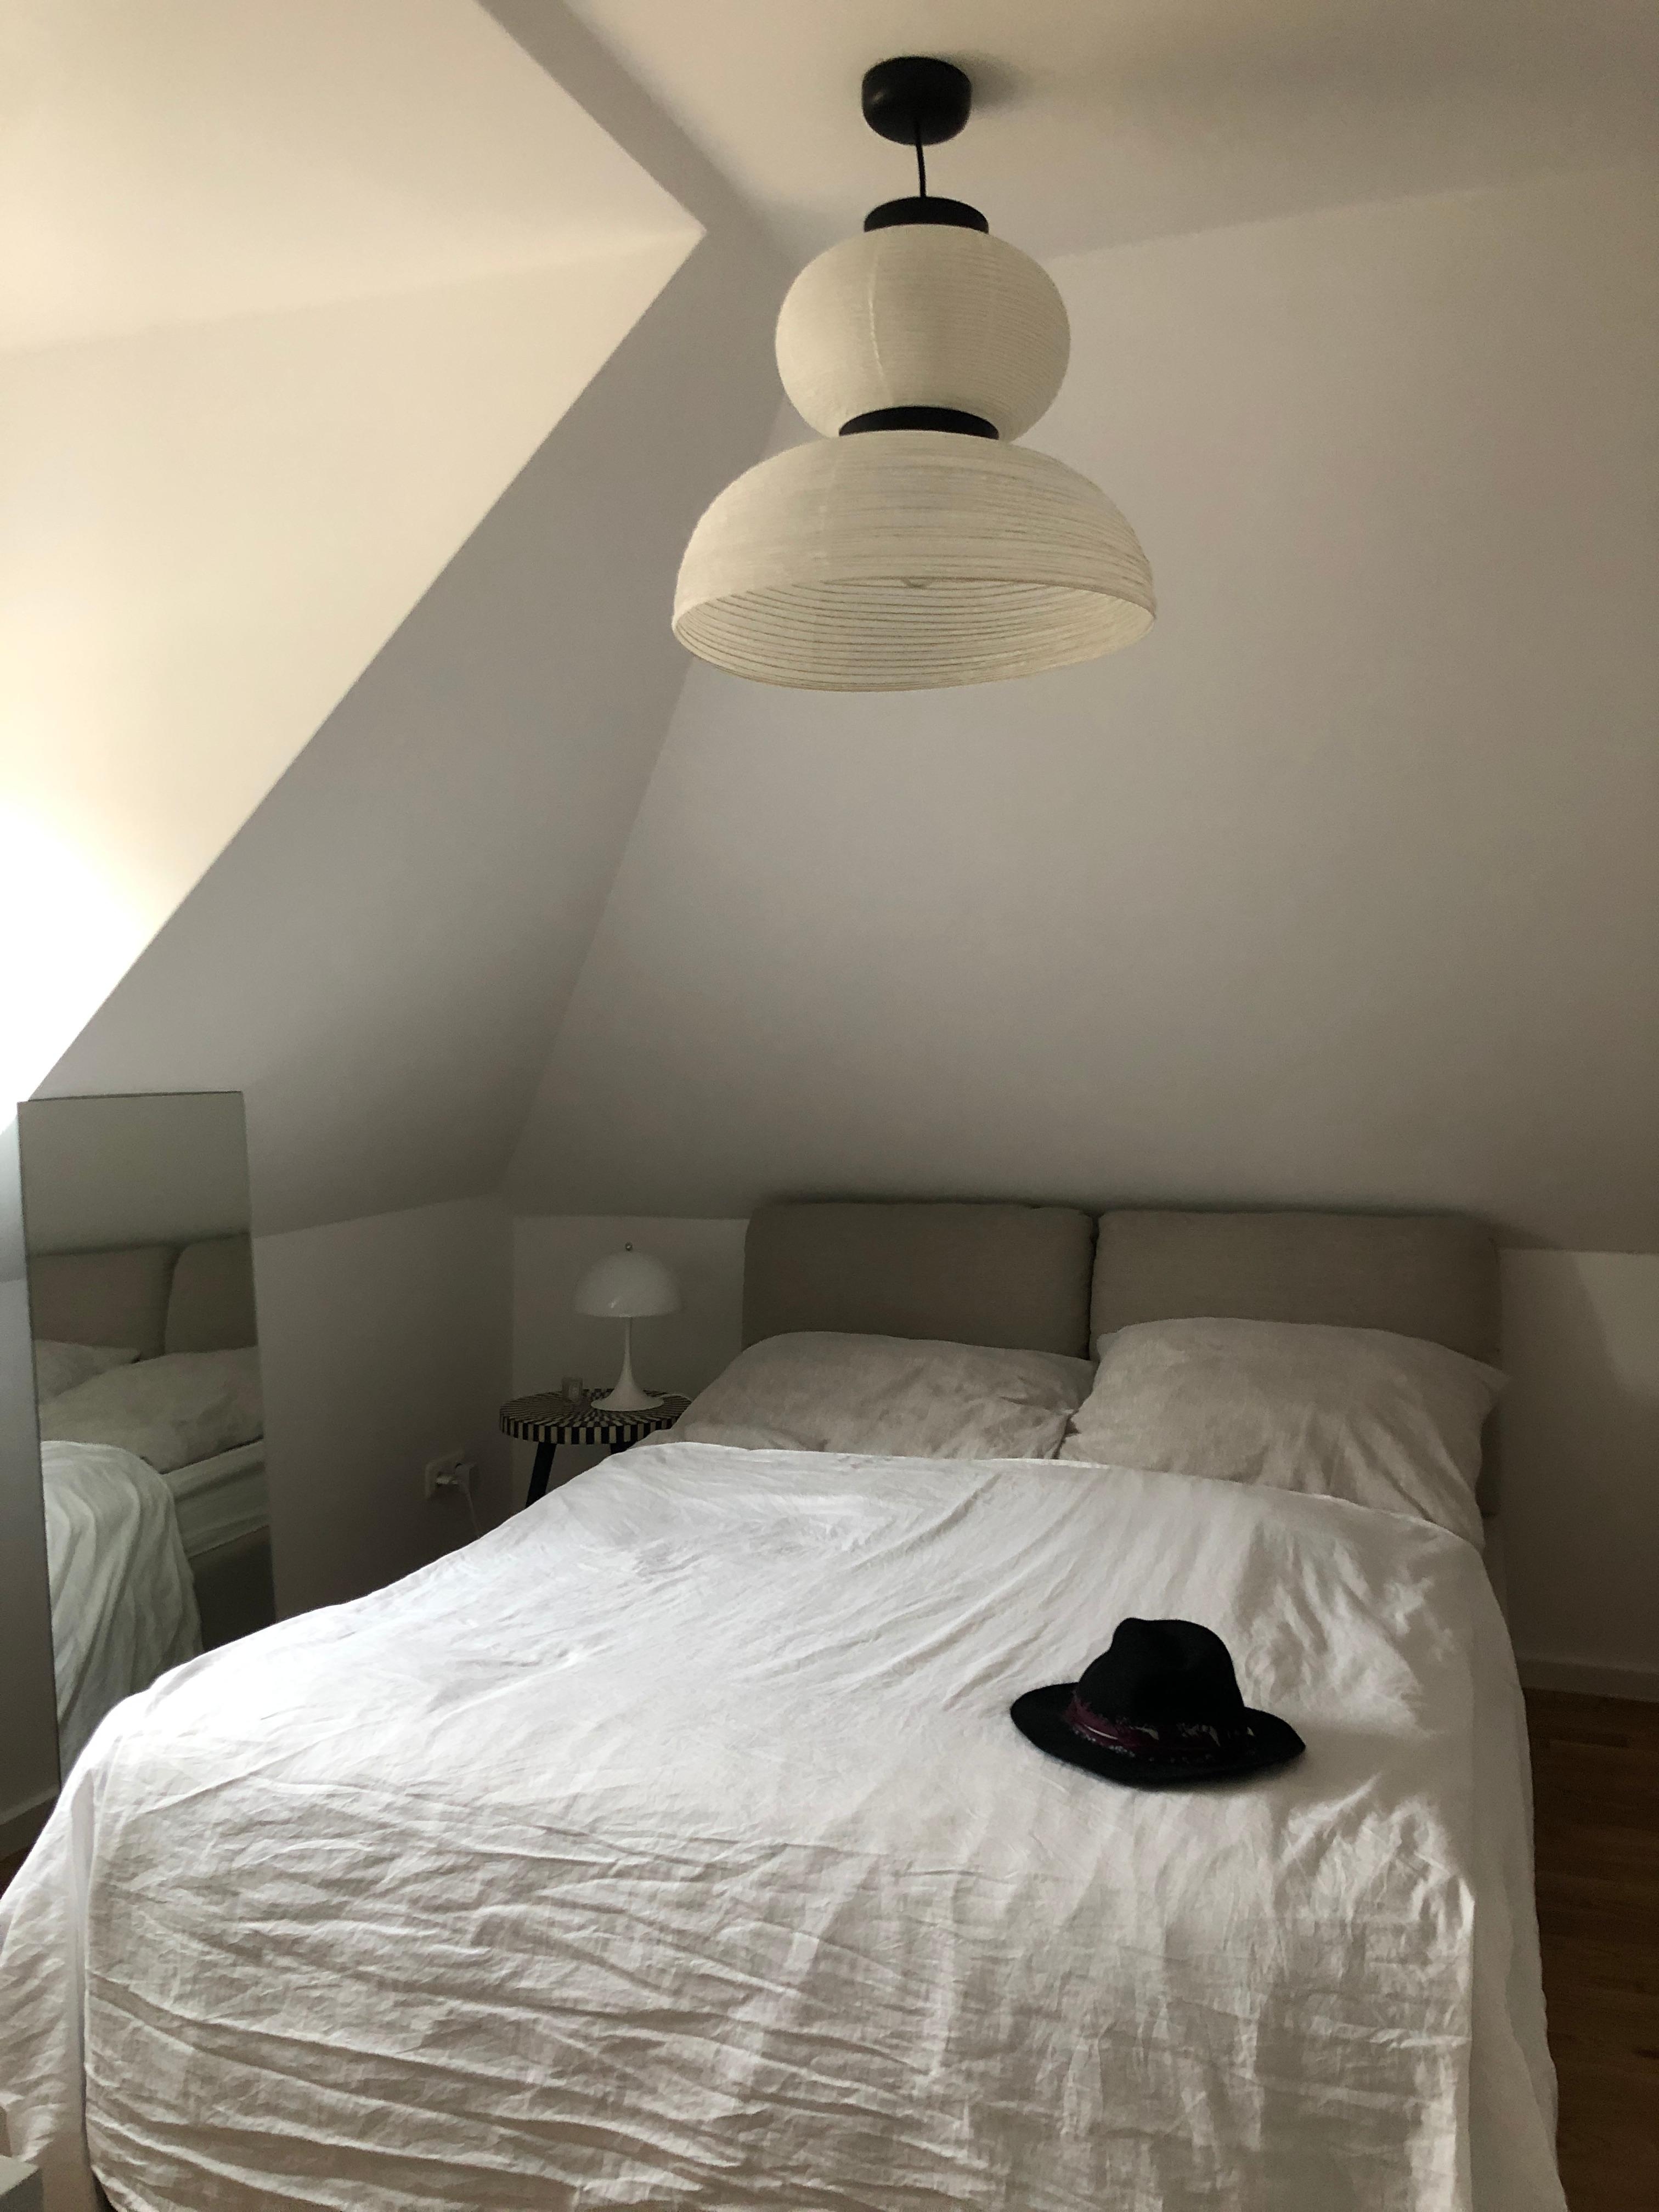 🕊
#white #nature #formakami #interior #bedroom #apartment #linen #washedlinen #interiordesign #andtradition #minimalist